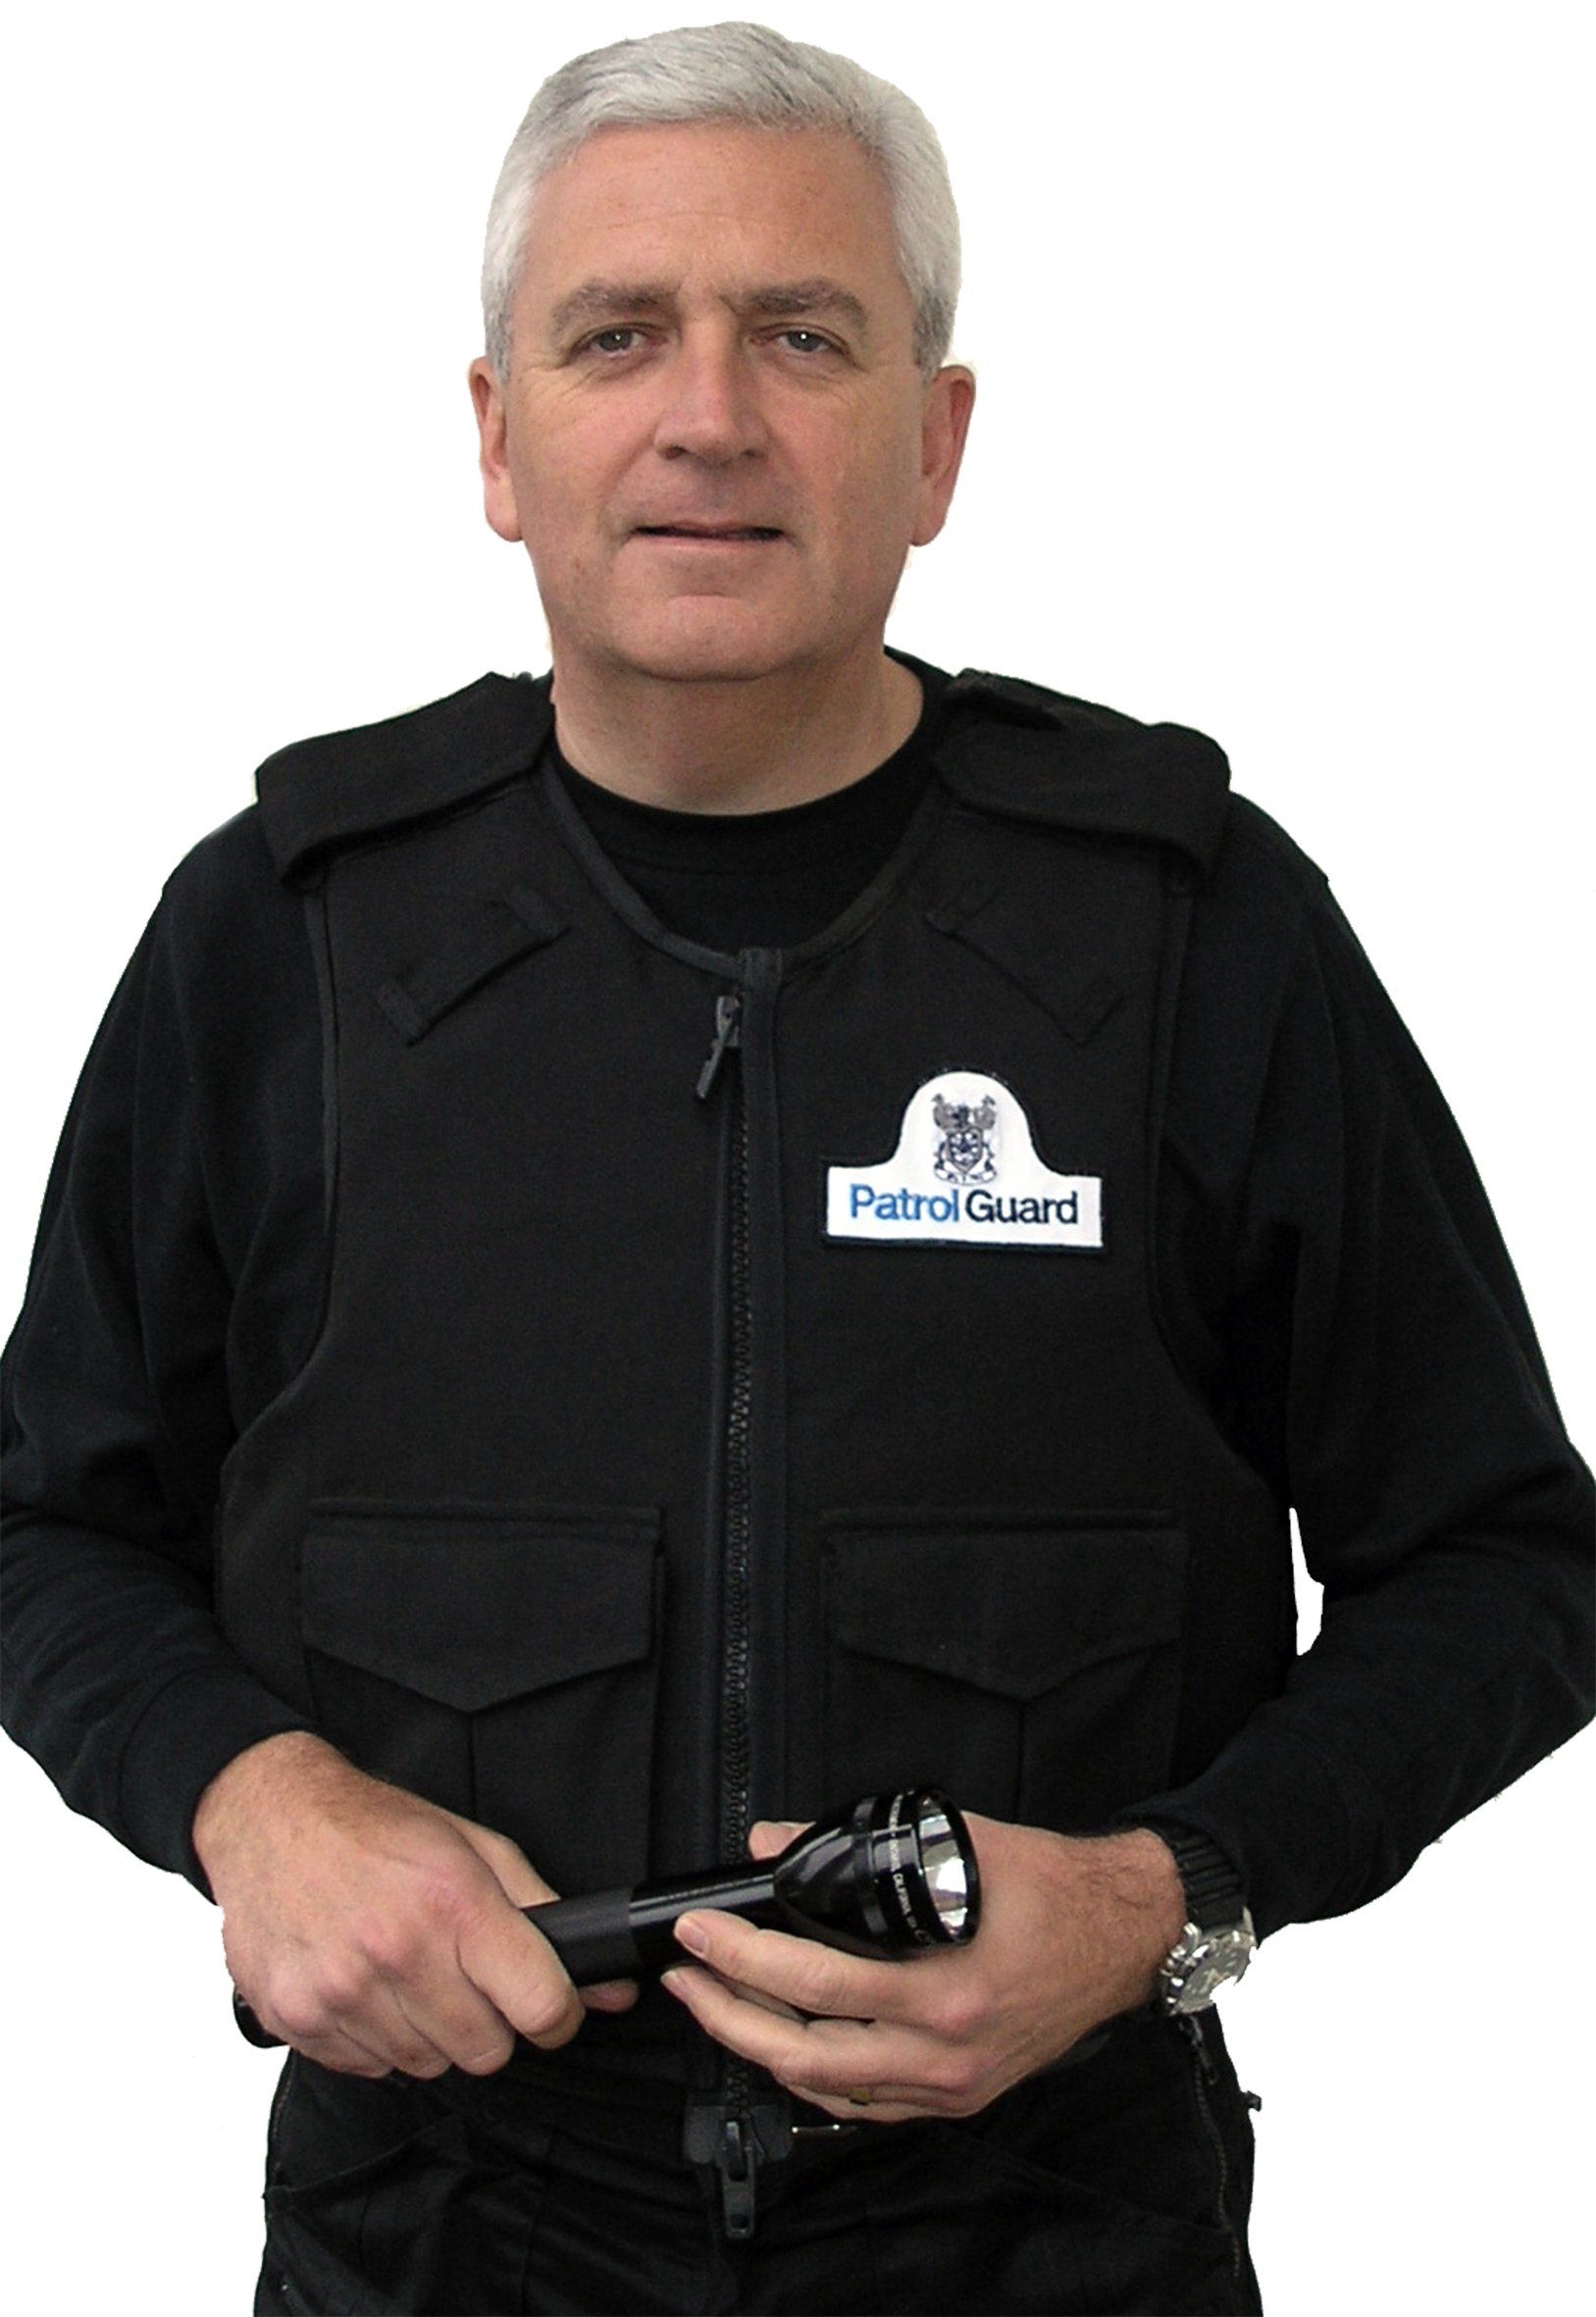 PatrolGuard director Graham Venn